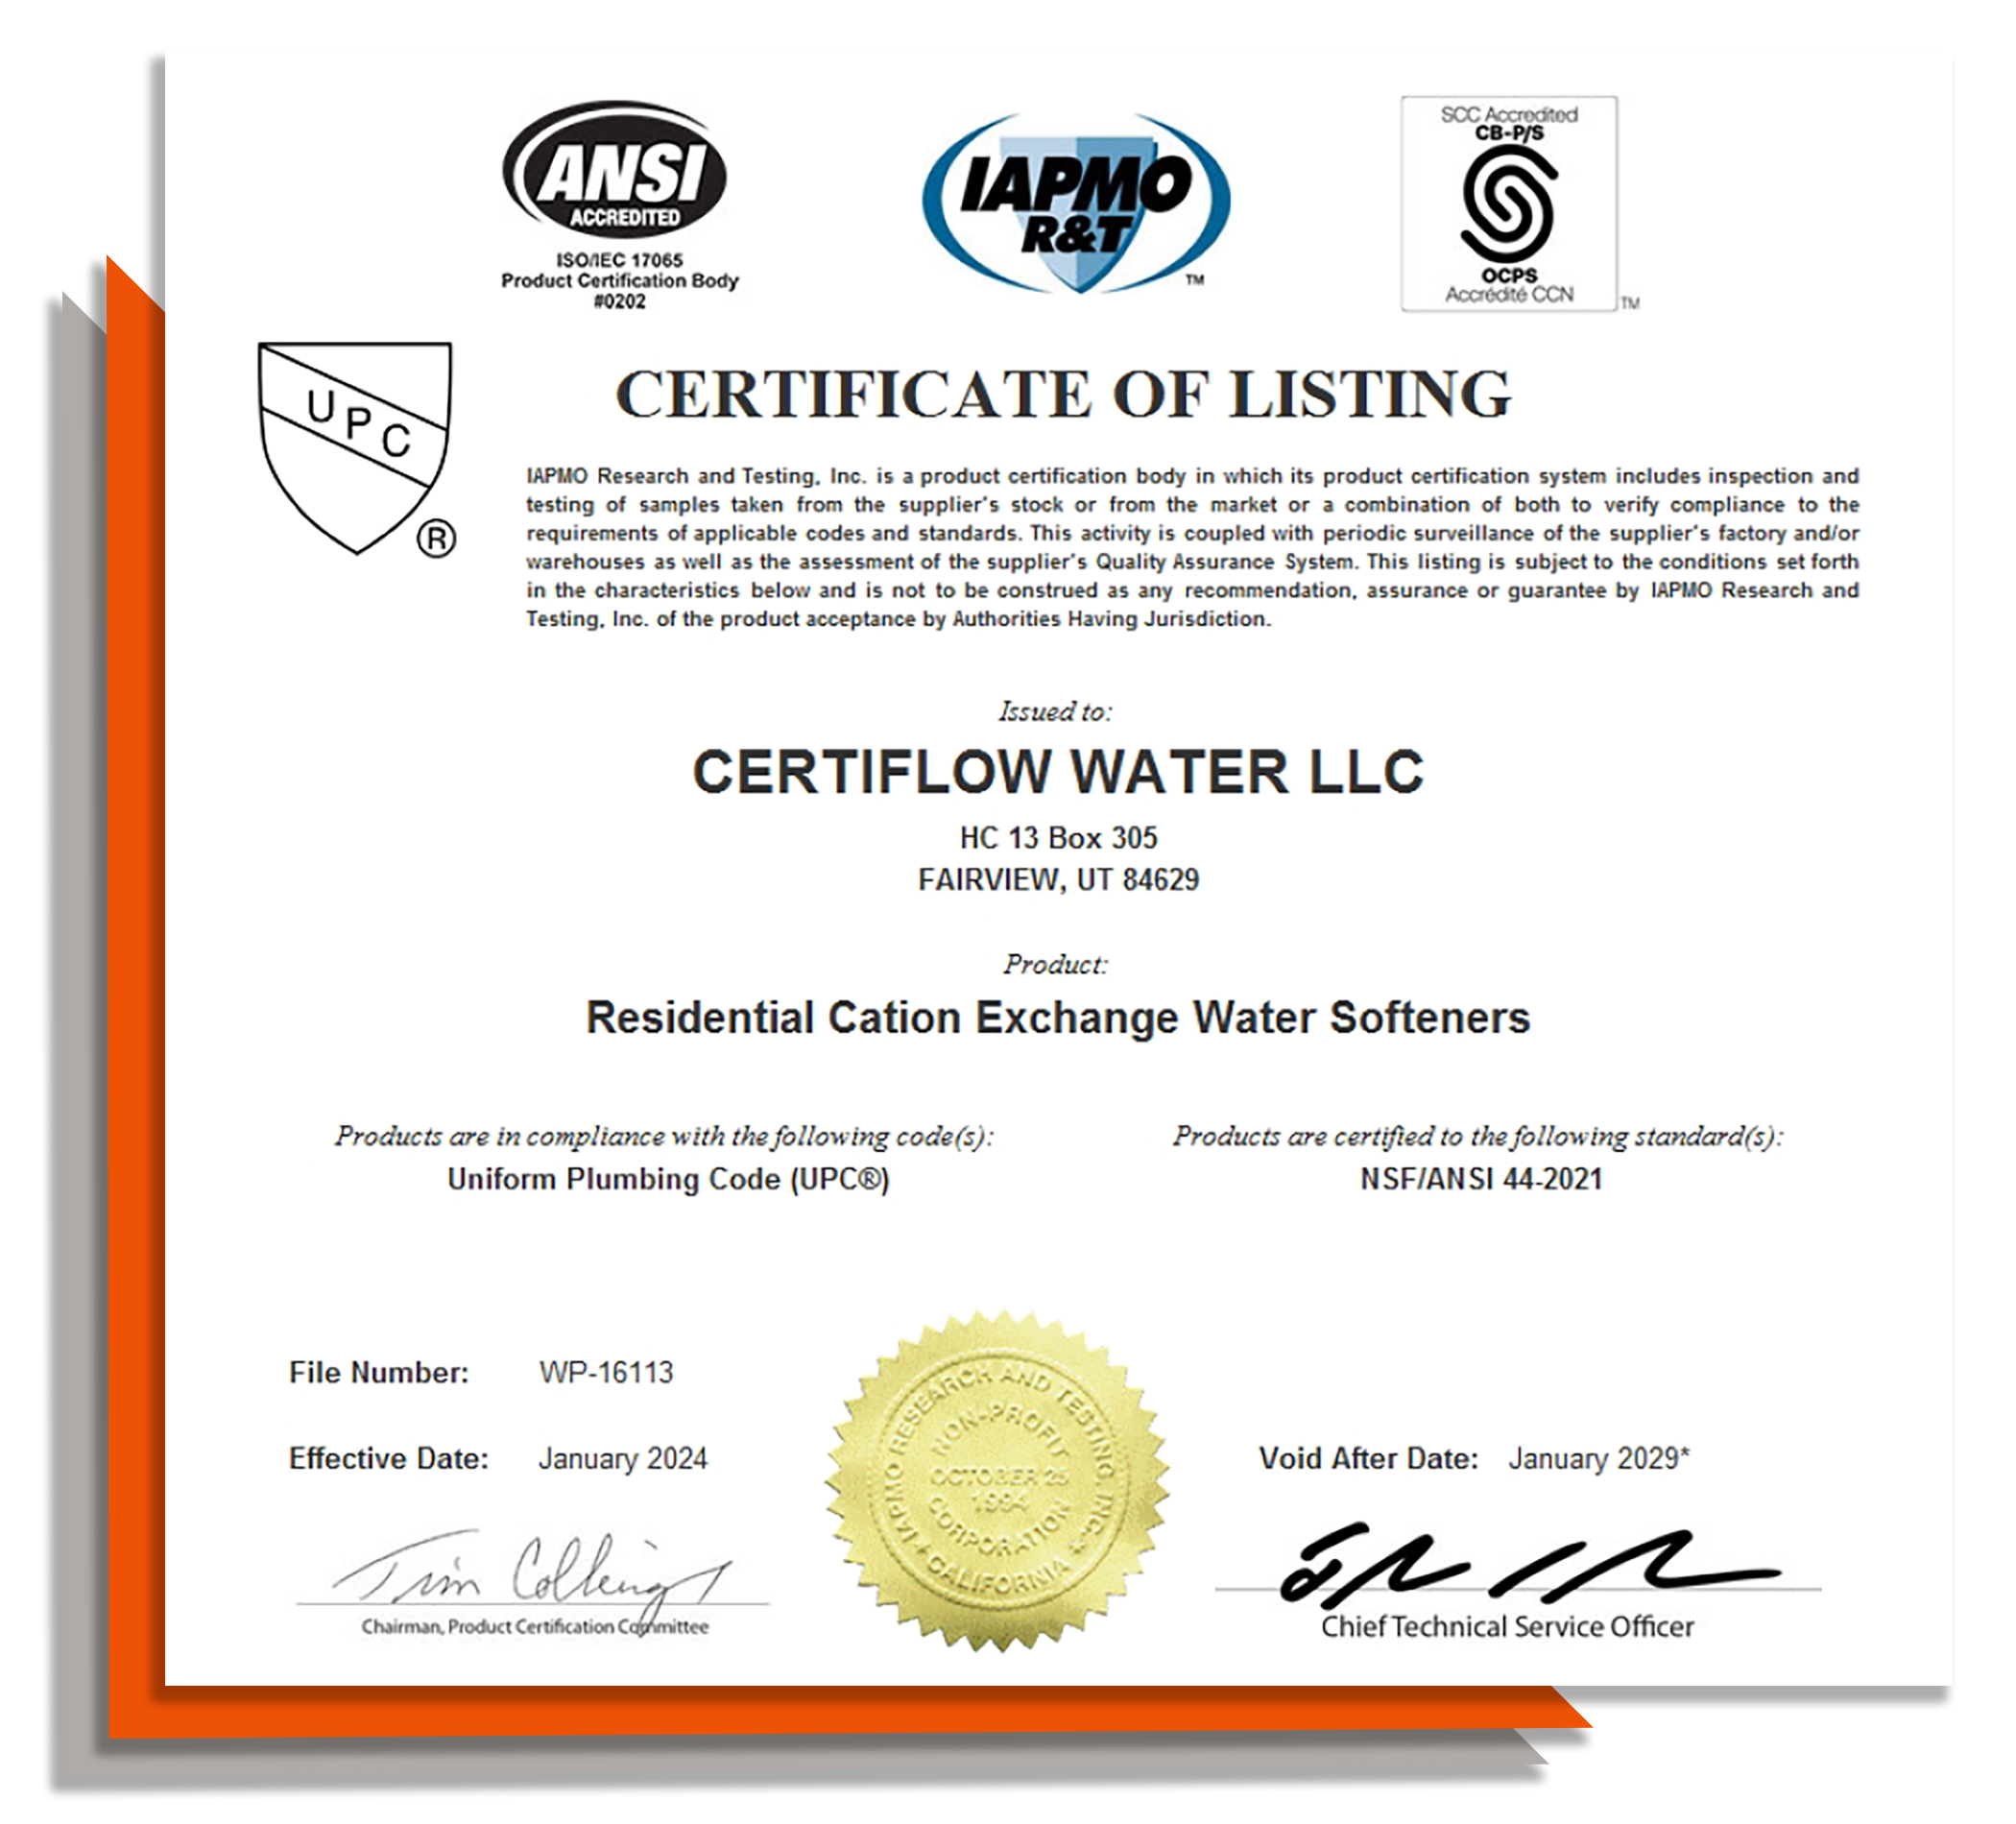 Image displaying IAPMO, NSF, UPC, Certification for Certiflow Water LLC